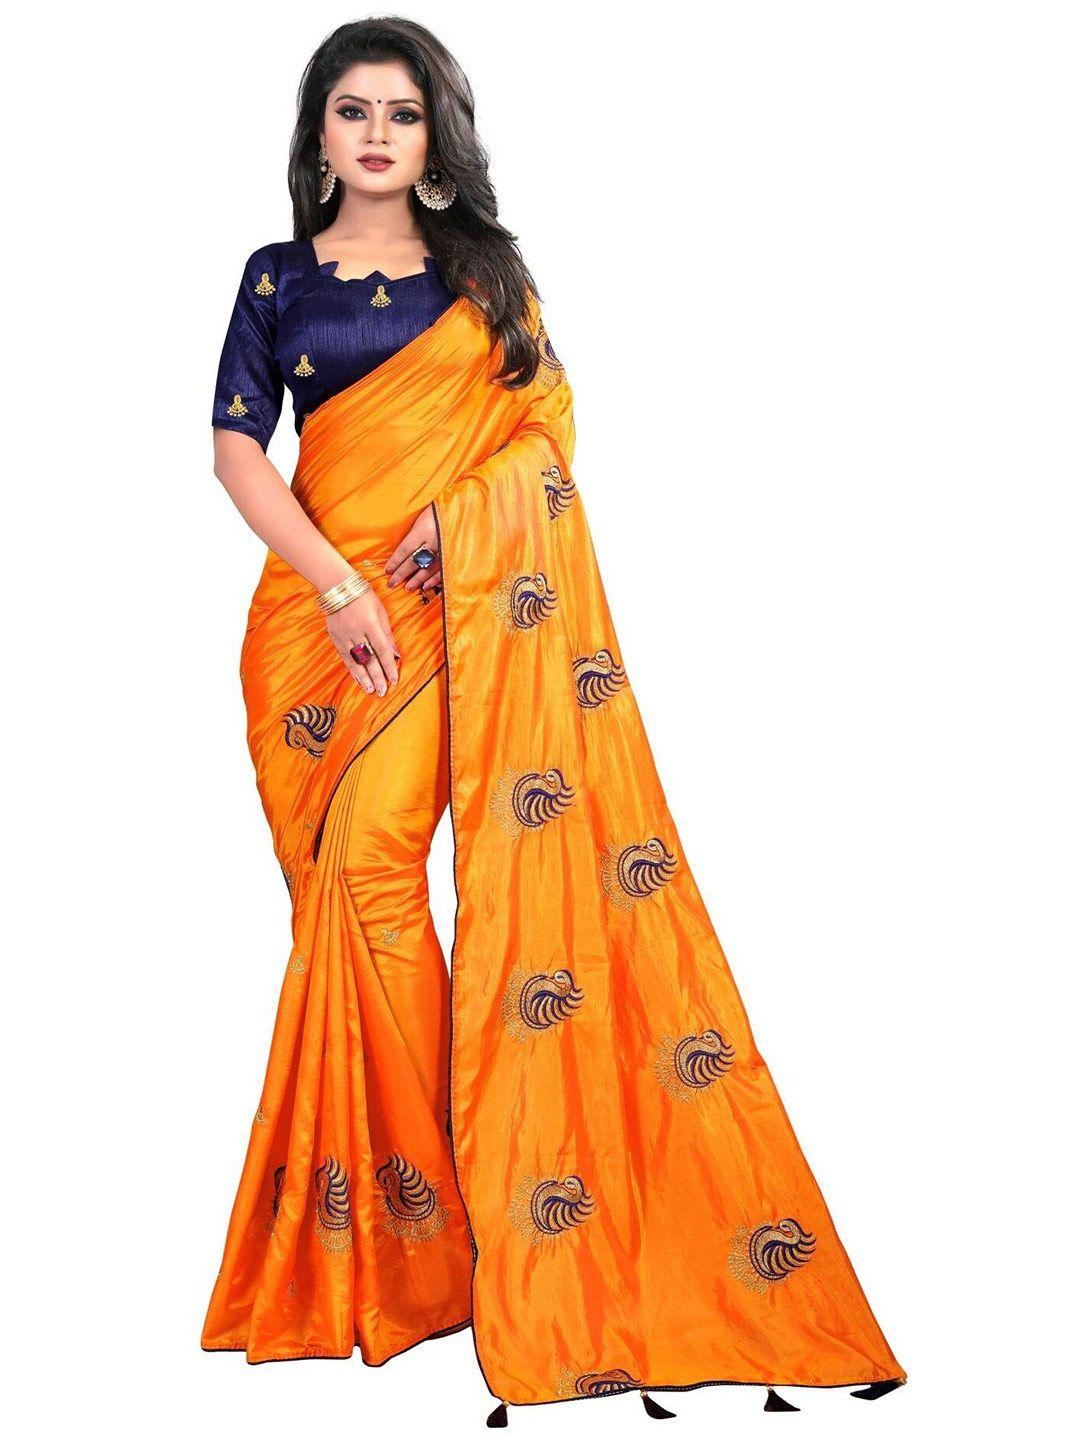 kuvarba fashion orange & gold-toned ethnic motifs embroidered silk blend saree